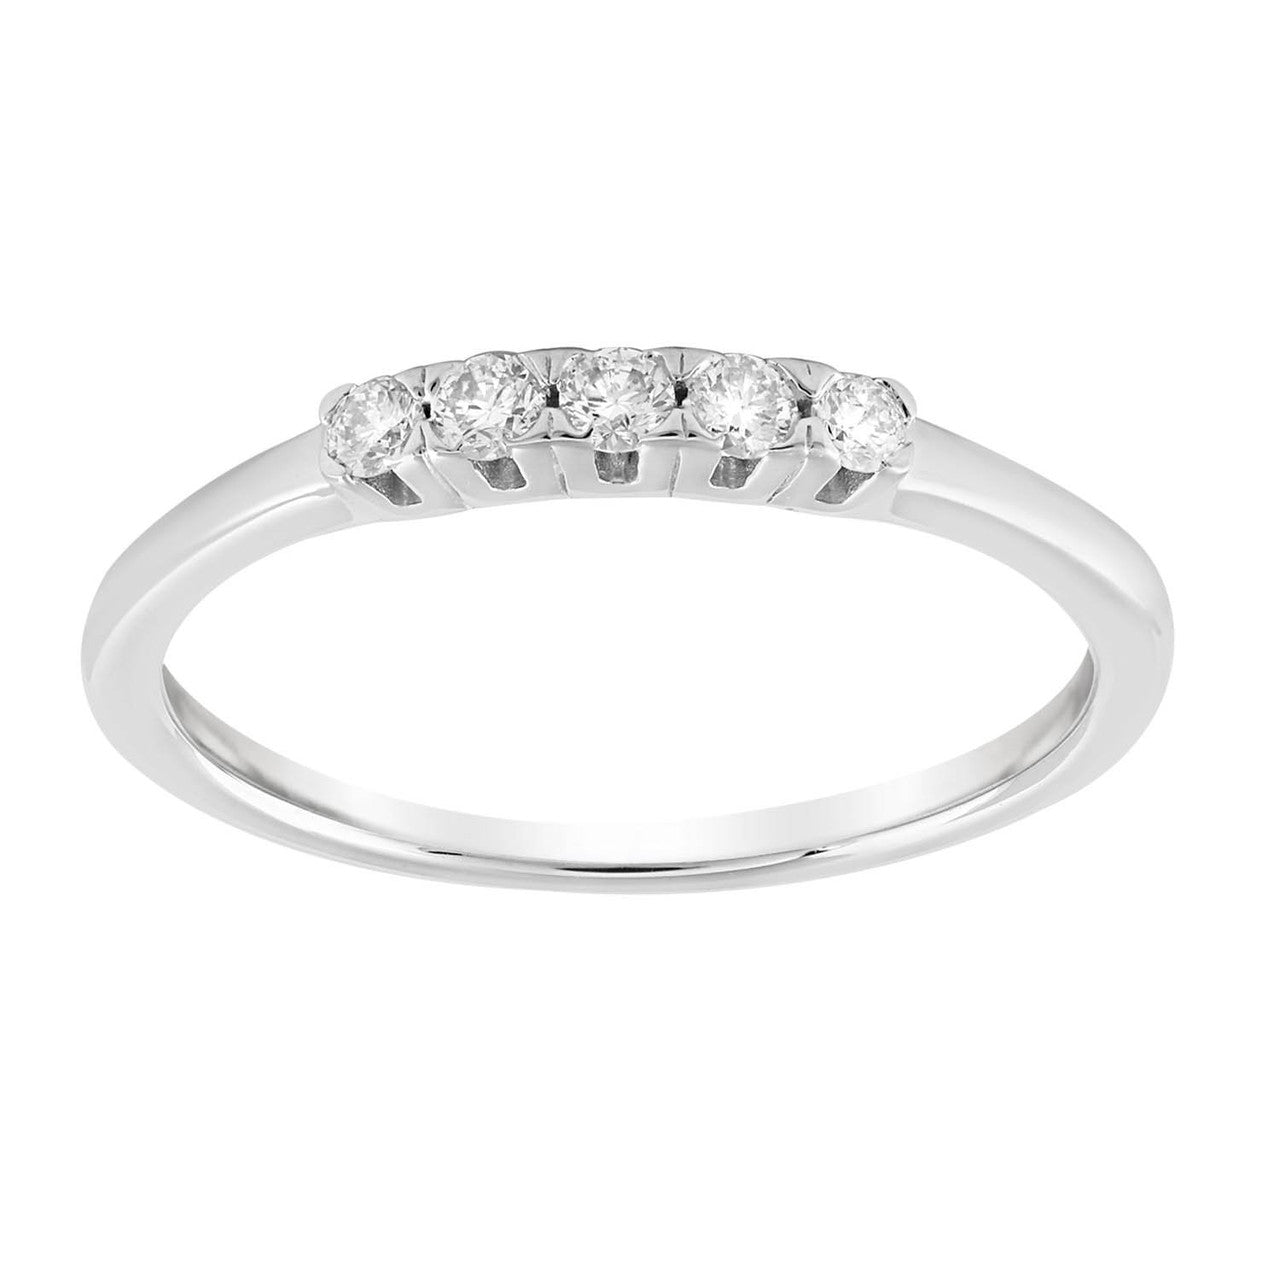 Ice Jewellery Ring with 0.15ct Diamonds in 9K White Gold -  IGR-39992-W | Ice Jewellery Australia